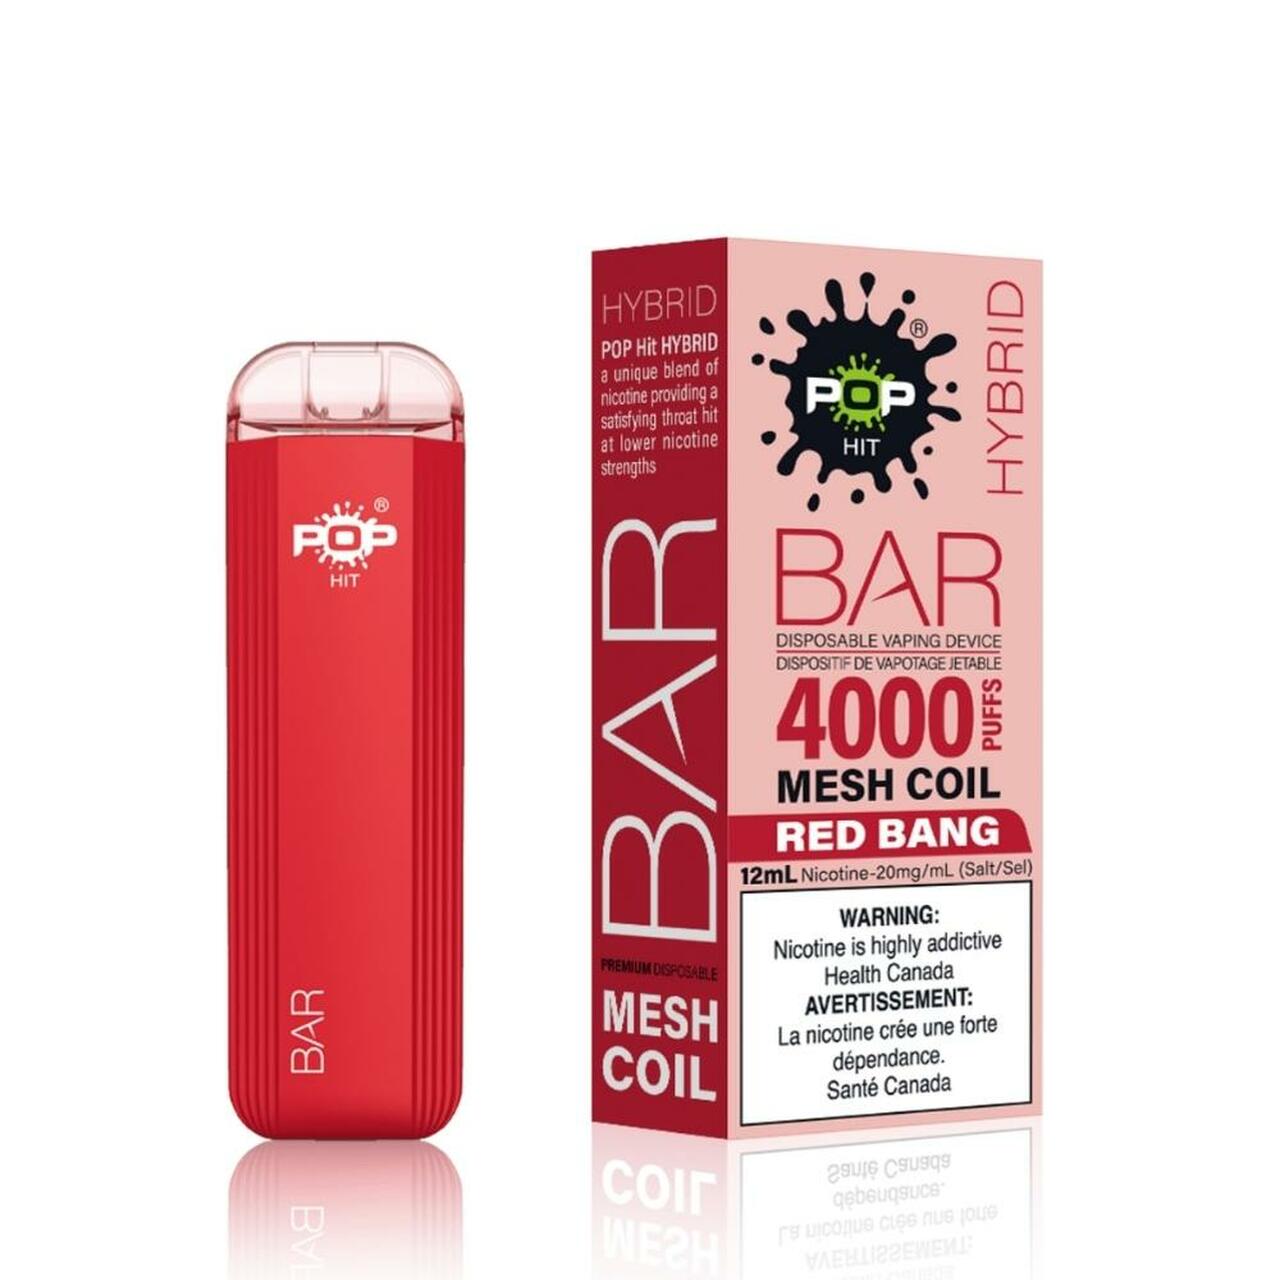 Red Bang - Pop Hybrid Bar 4000 Puff  - 5pc/Carton